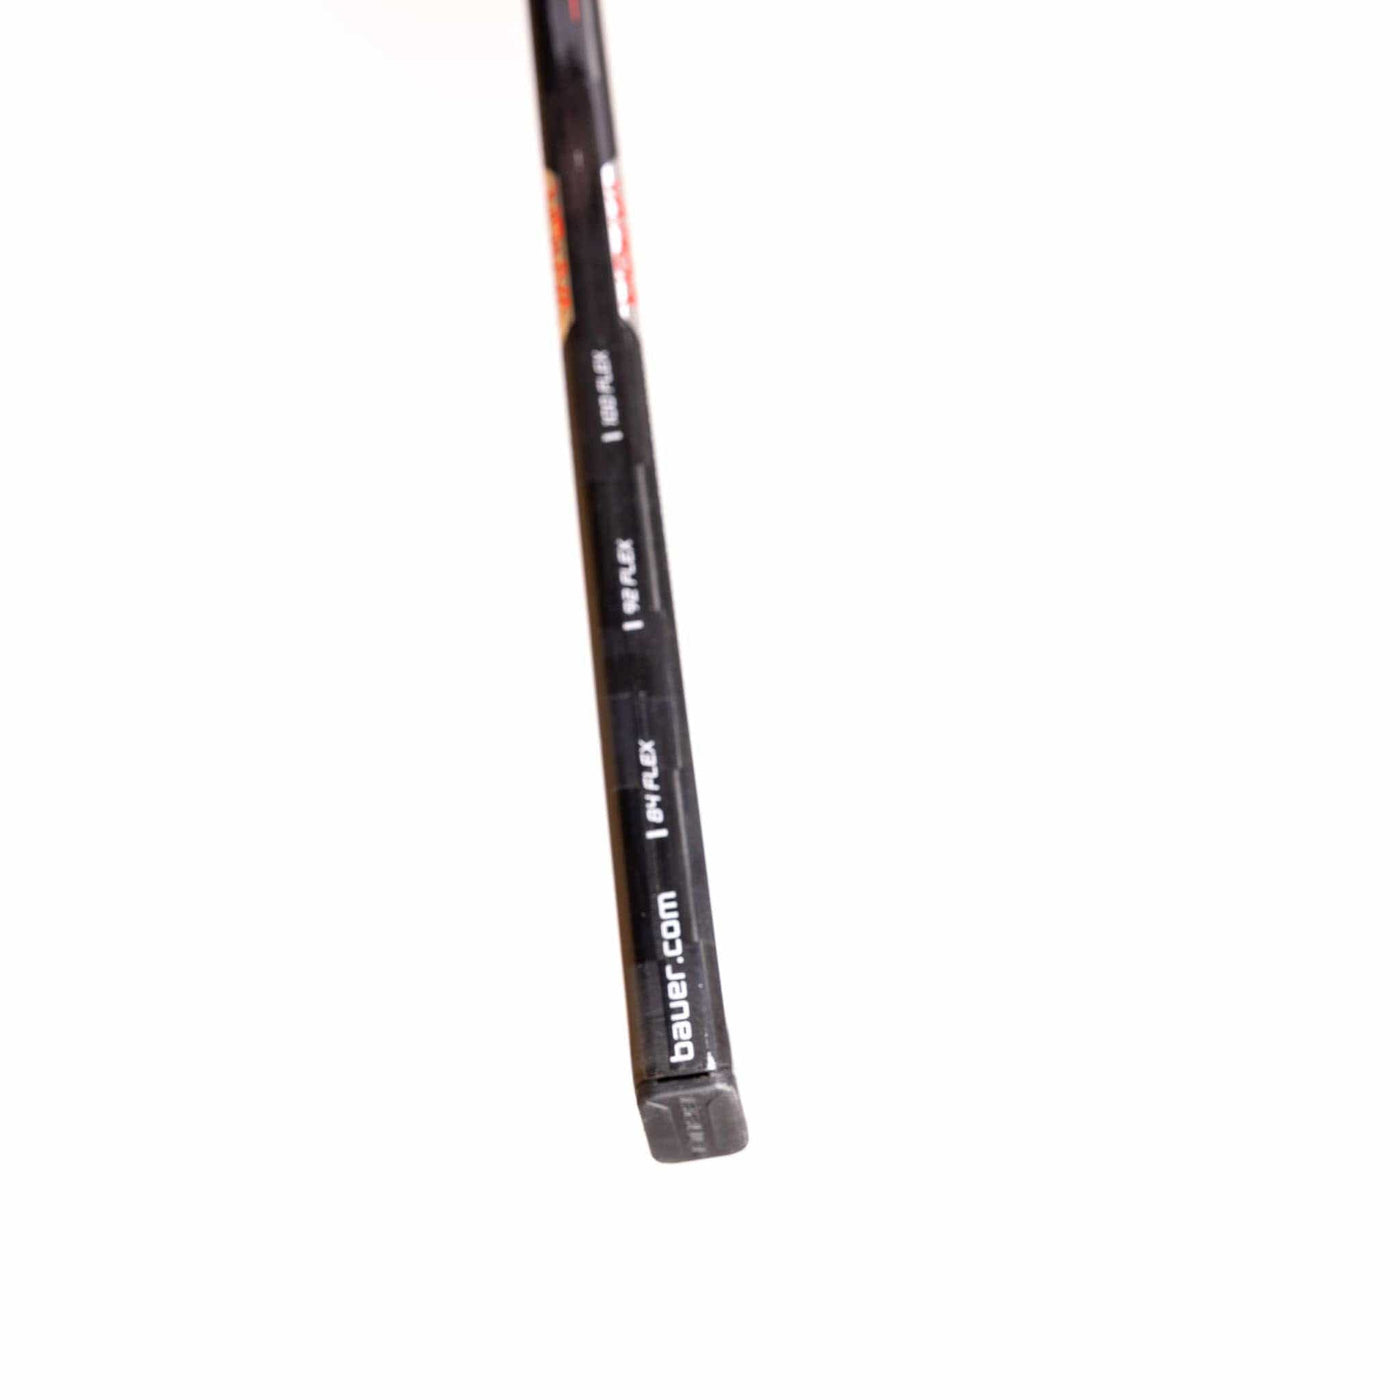 Bauer Vapor HyperLite Senior Hockey Stick